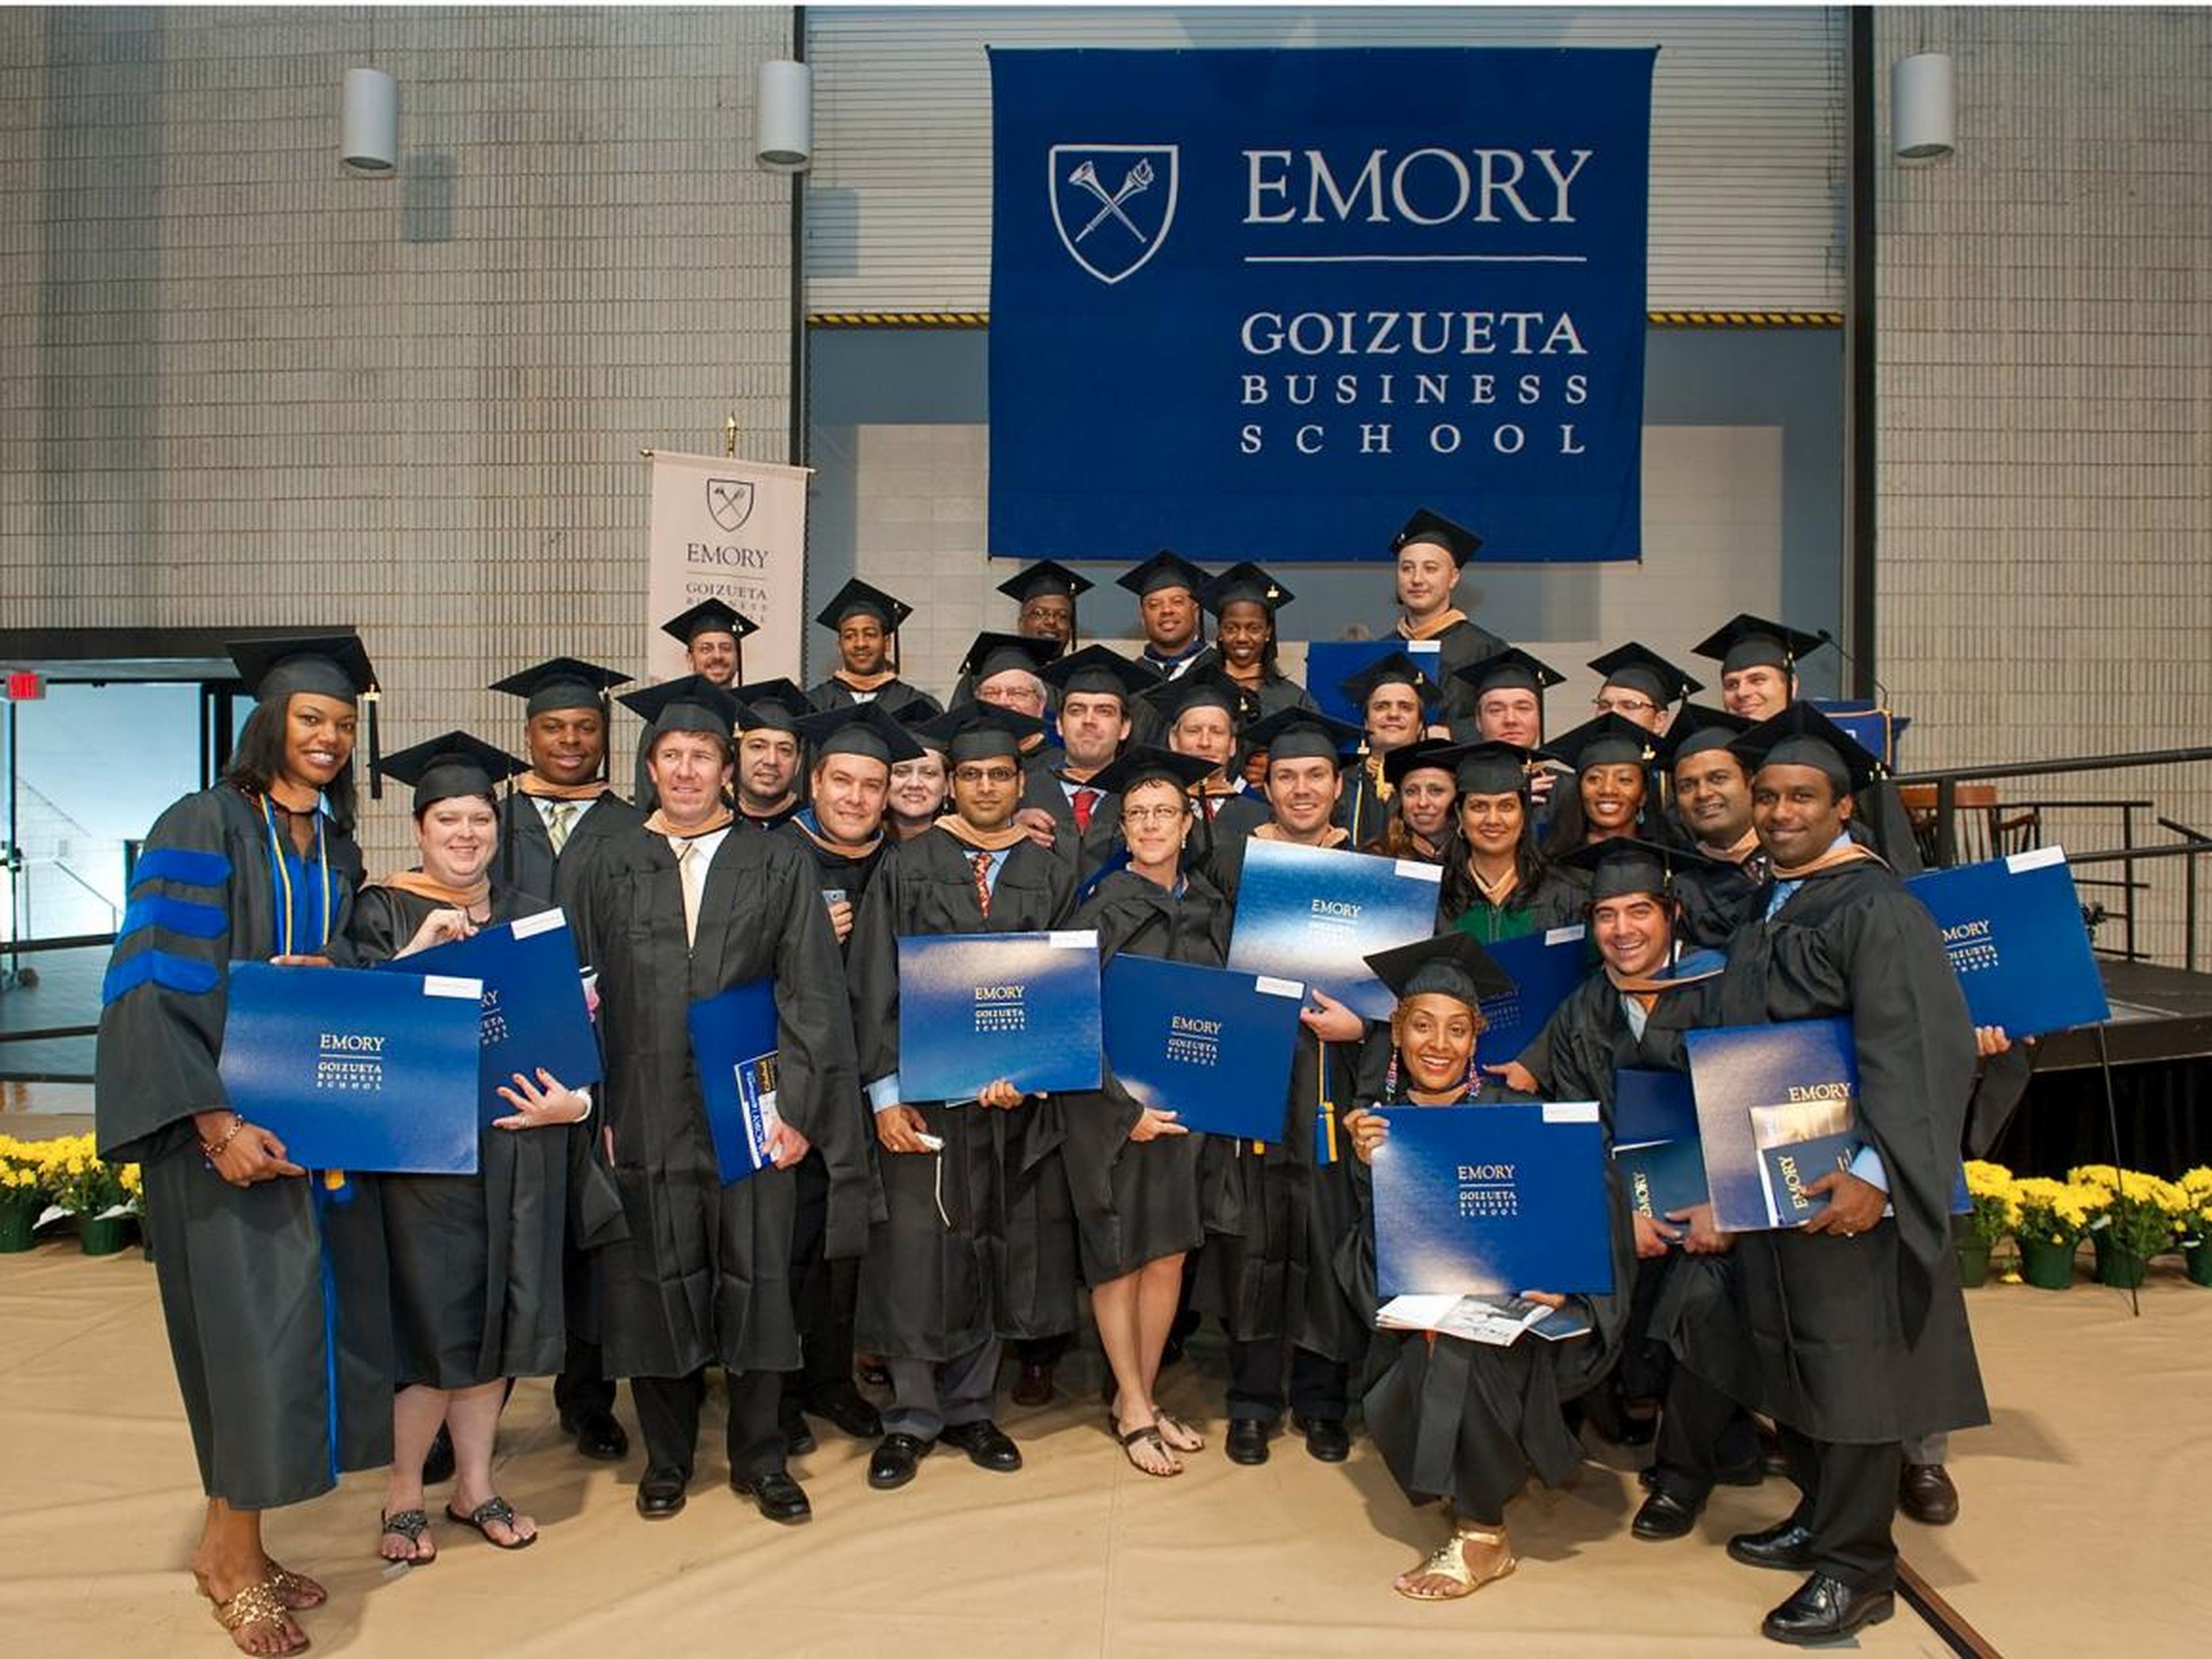 T-50. Emory (Goizueta) grads earn an average post-graduation salary of $120K to $130K.